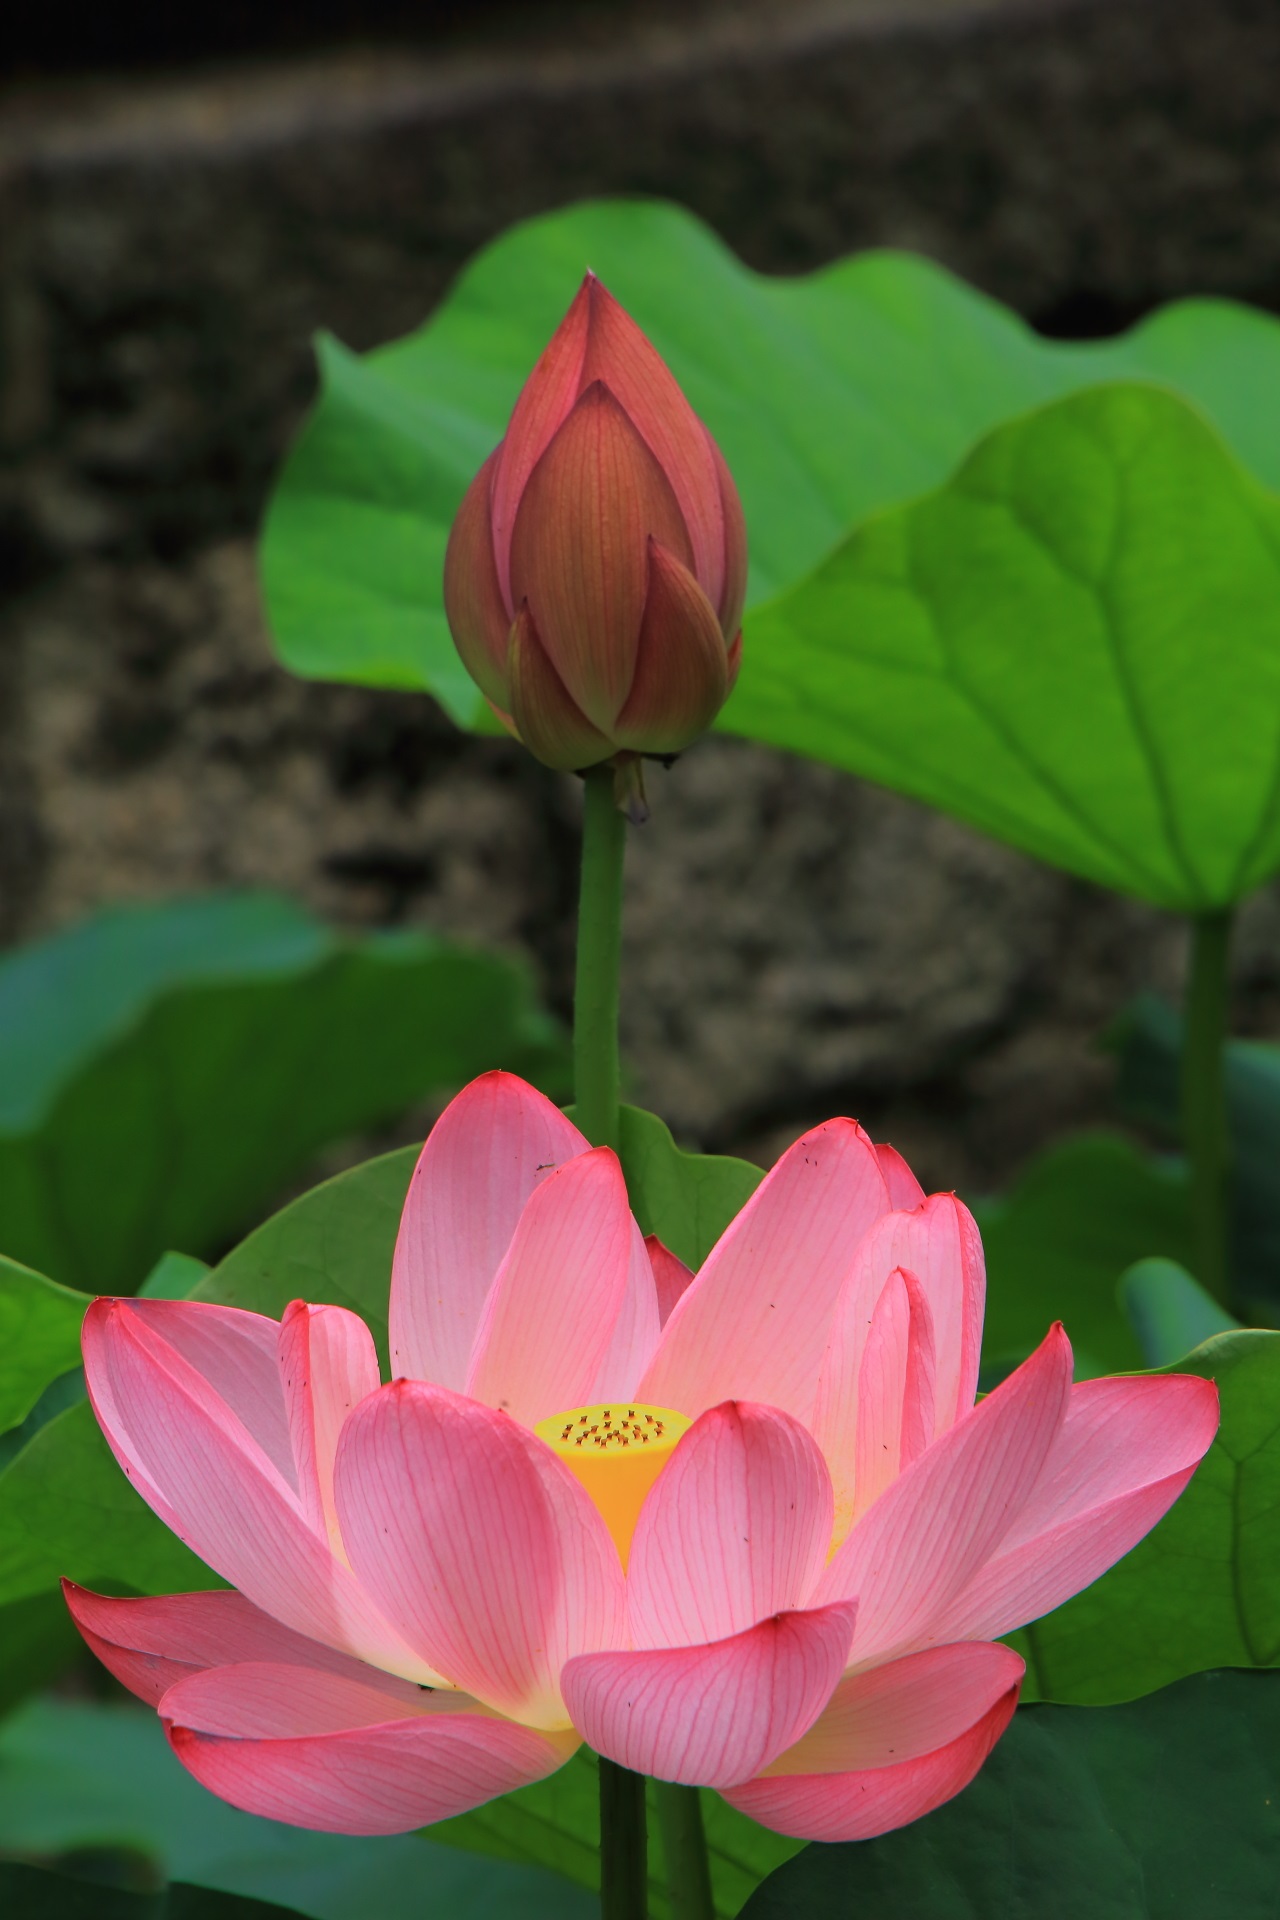 The lotus of Kyoto Higashi Honganji Temple